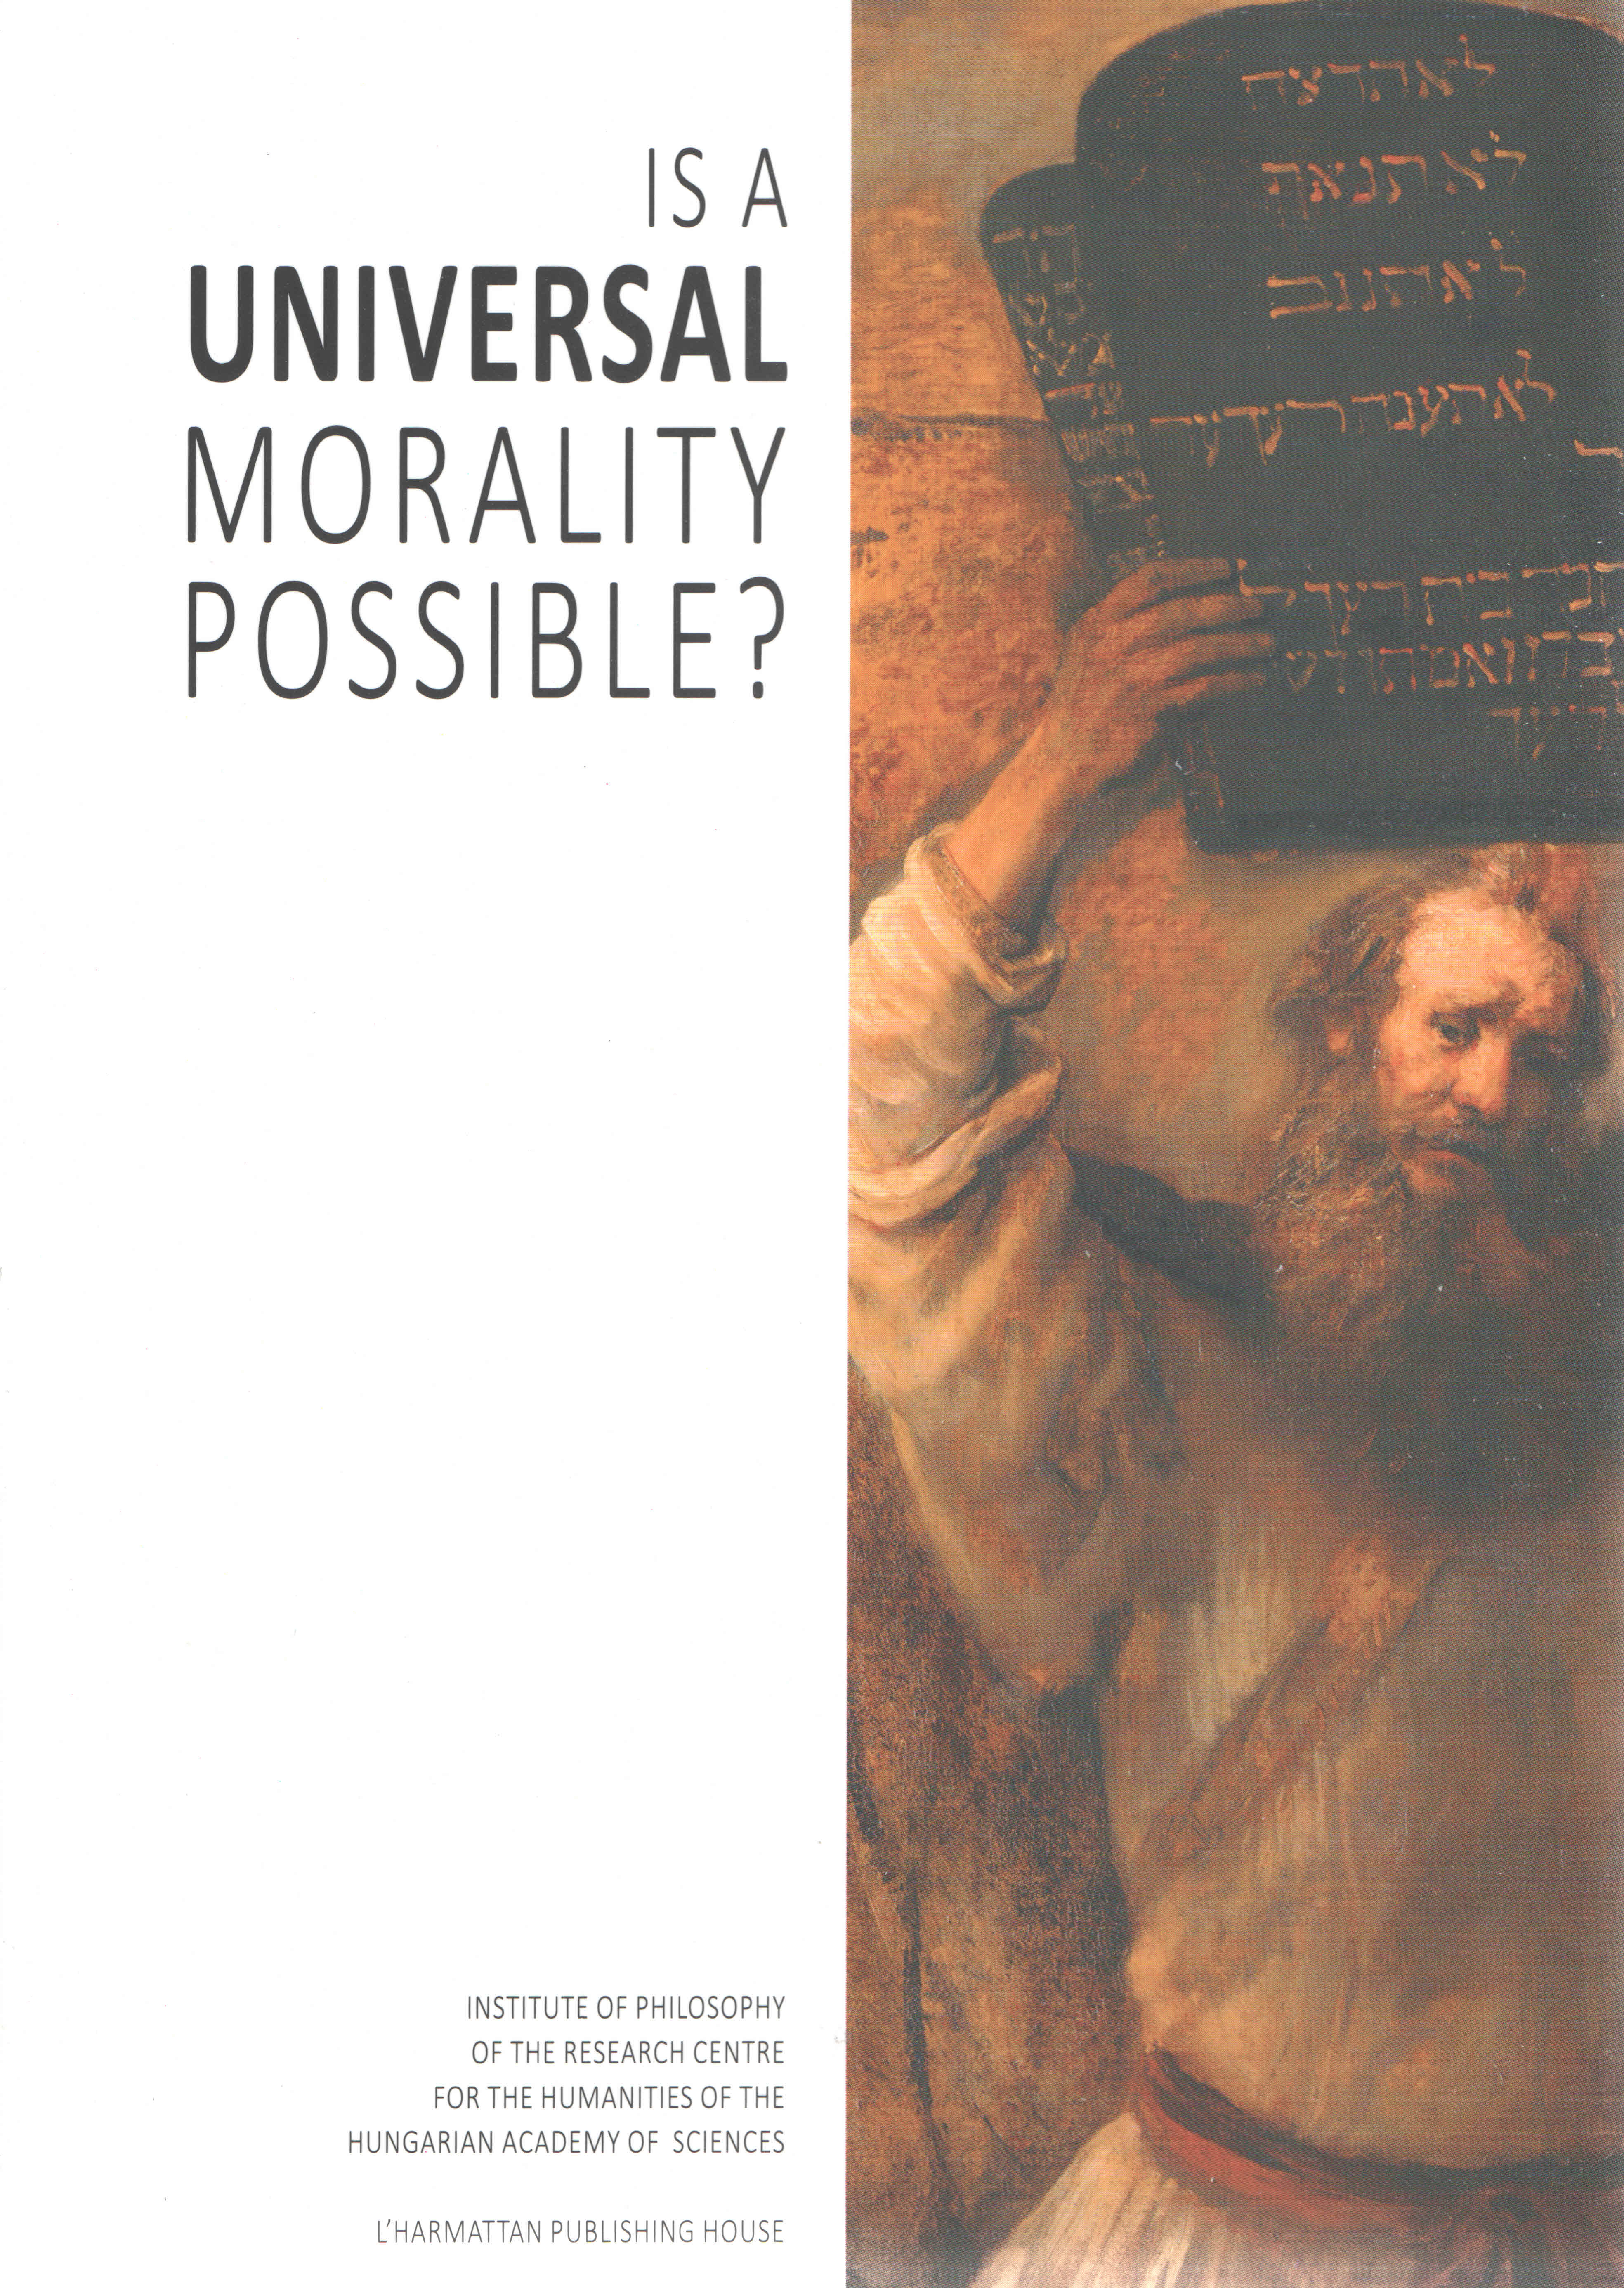 Morality knyv bort